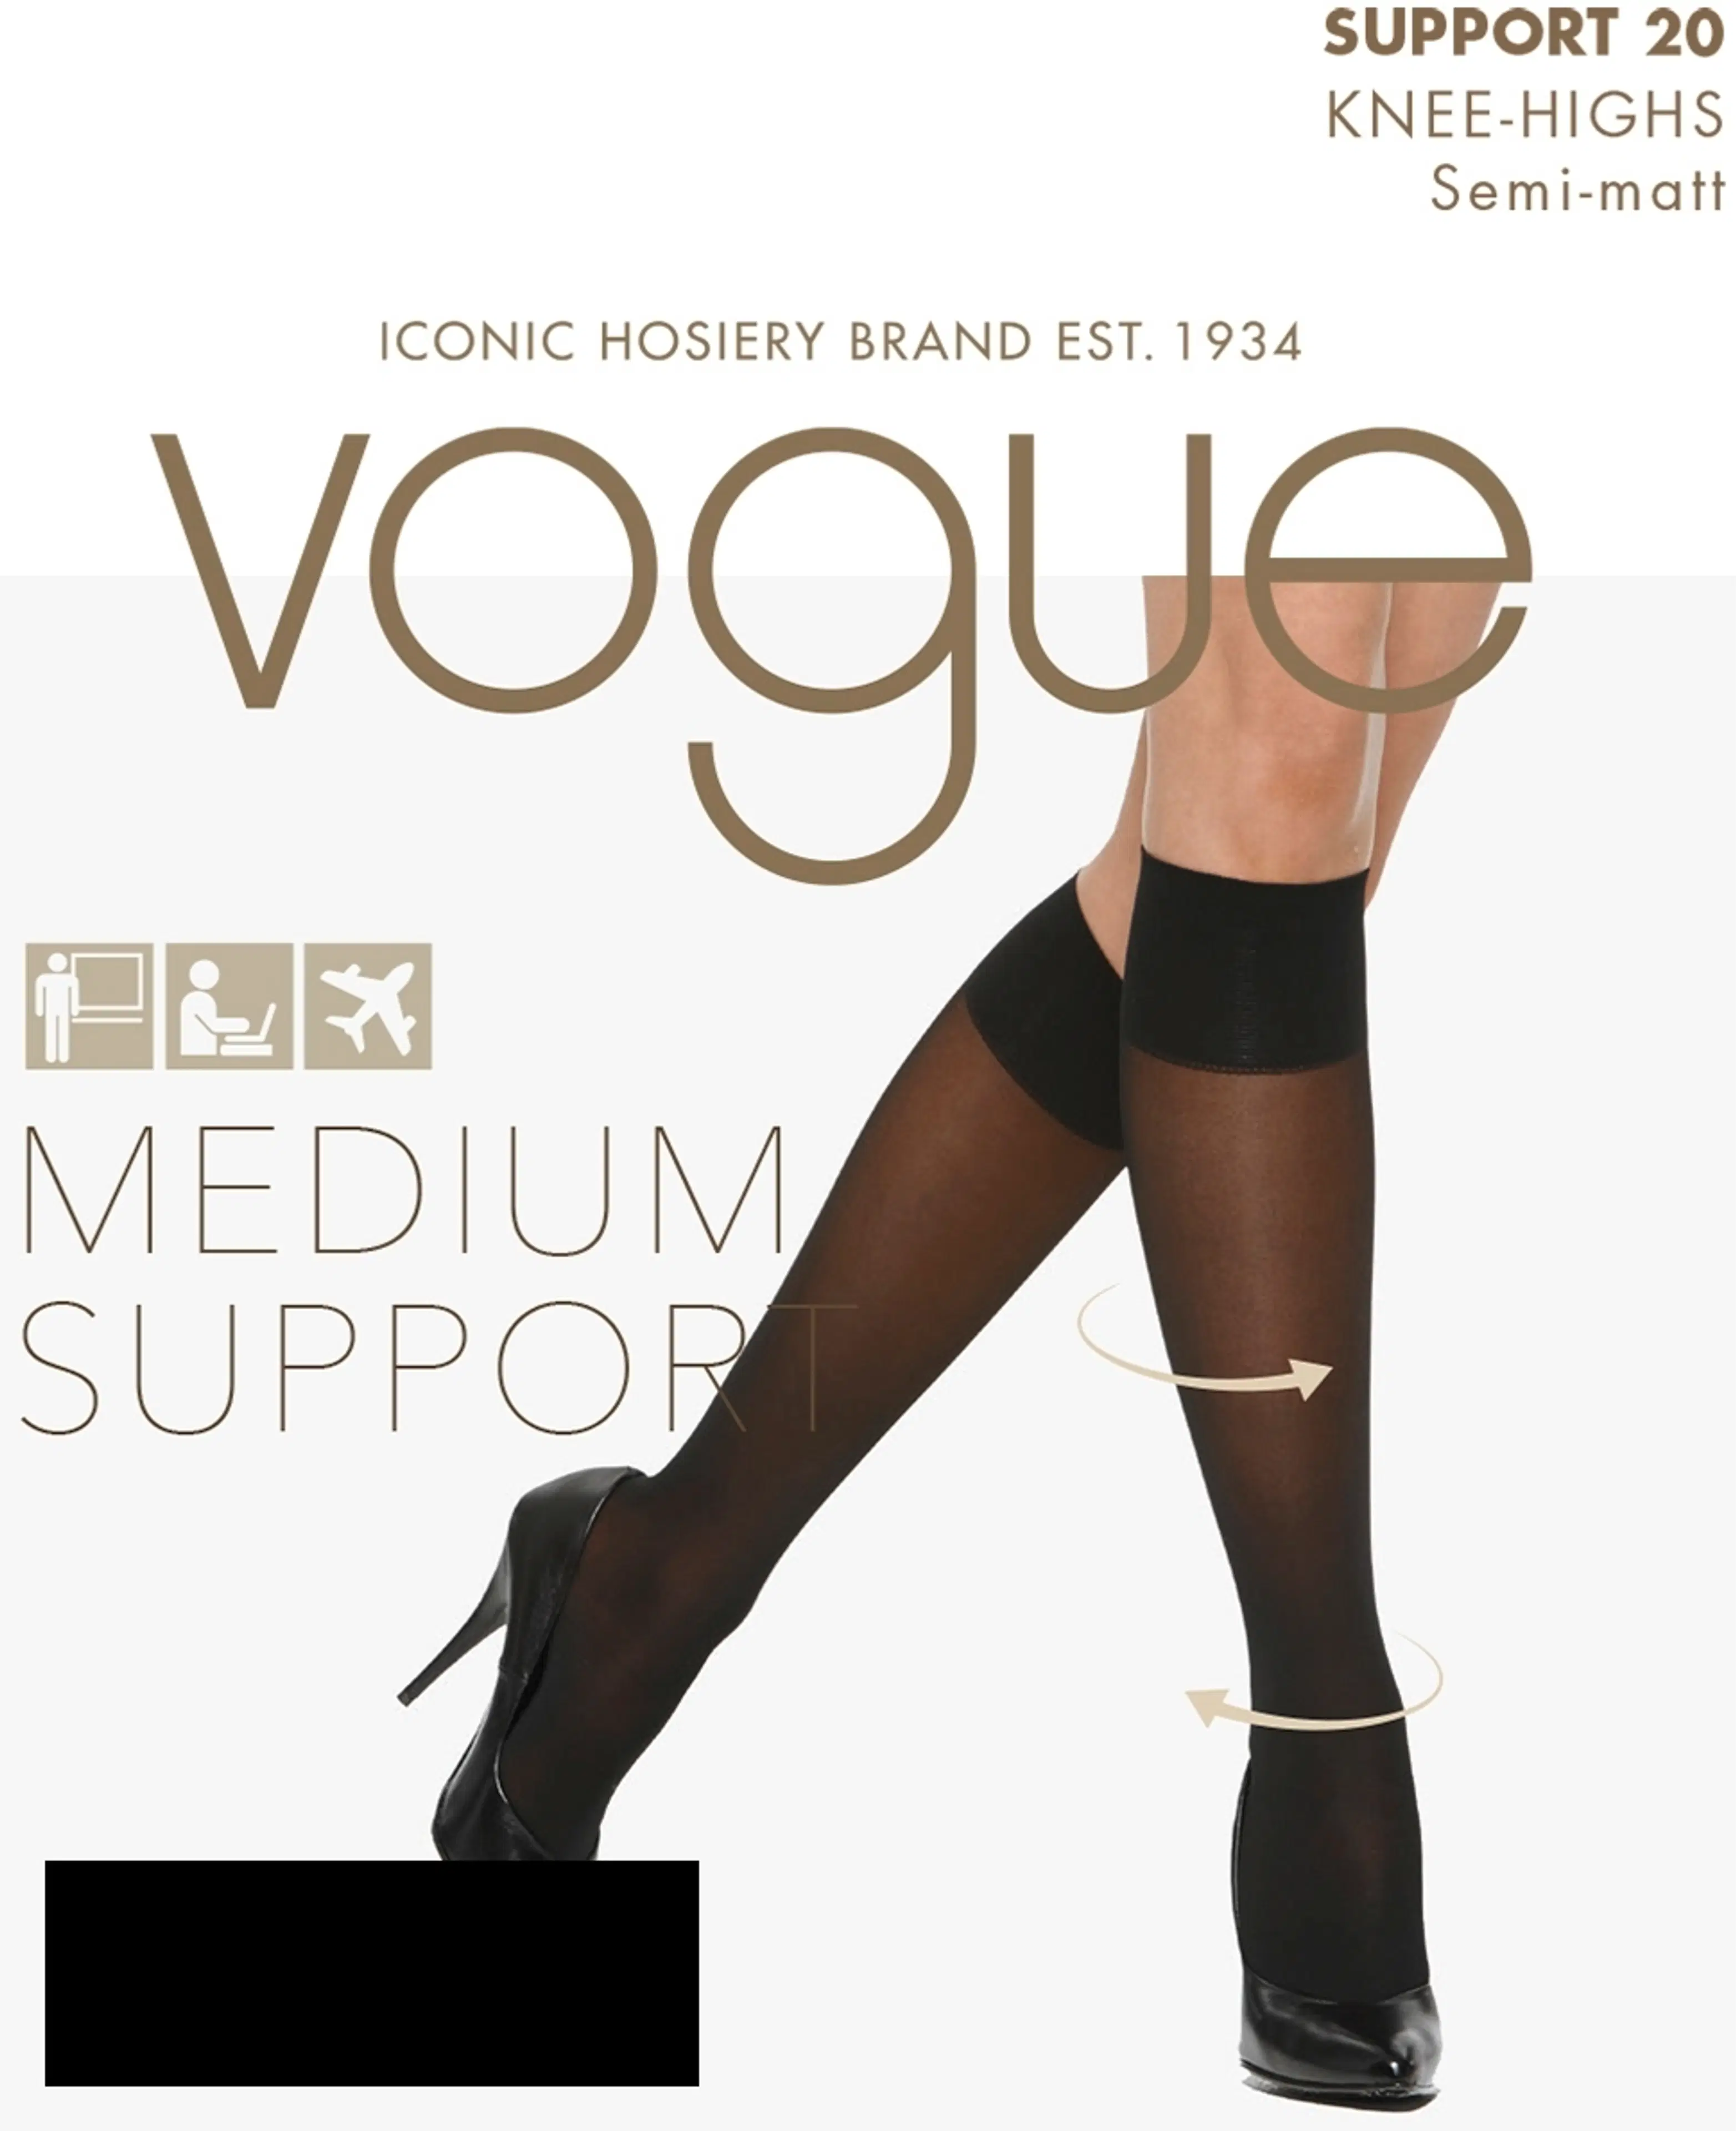 Vogue Support Knee polvisukat 20 den